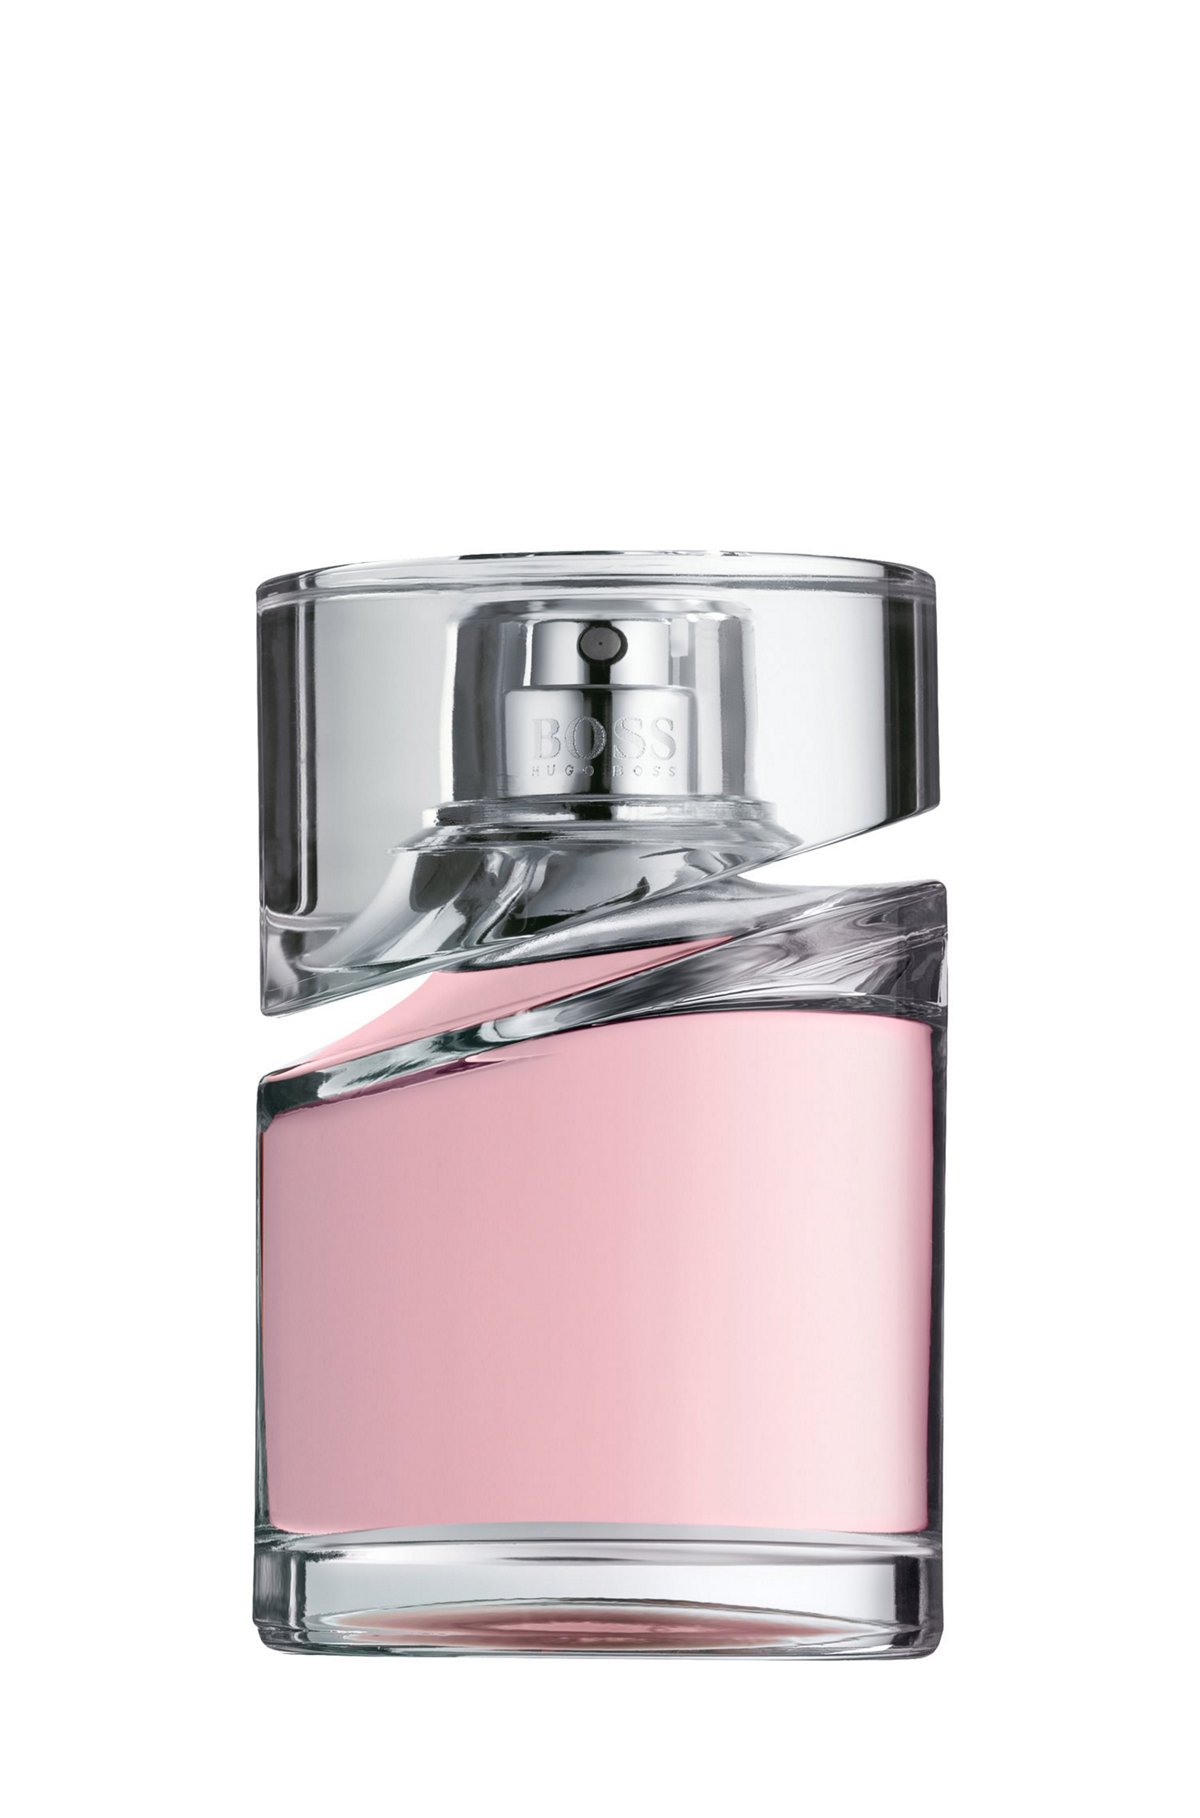 Eau de parfum Femme by BOSS 75 ml, Assorted-Pre-Pack